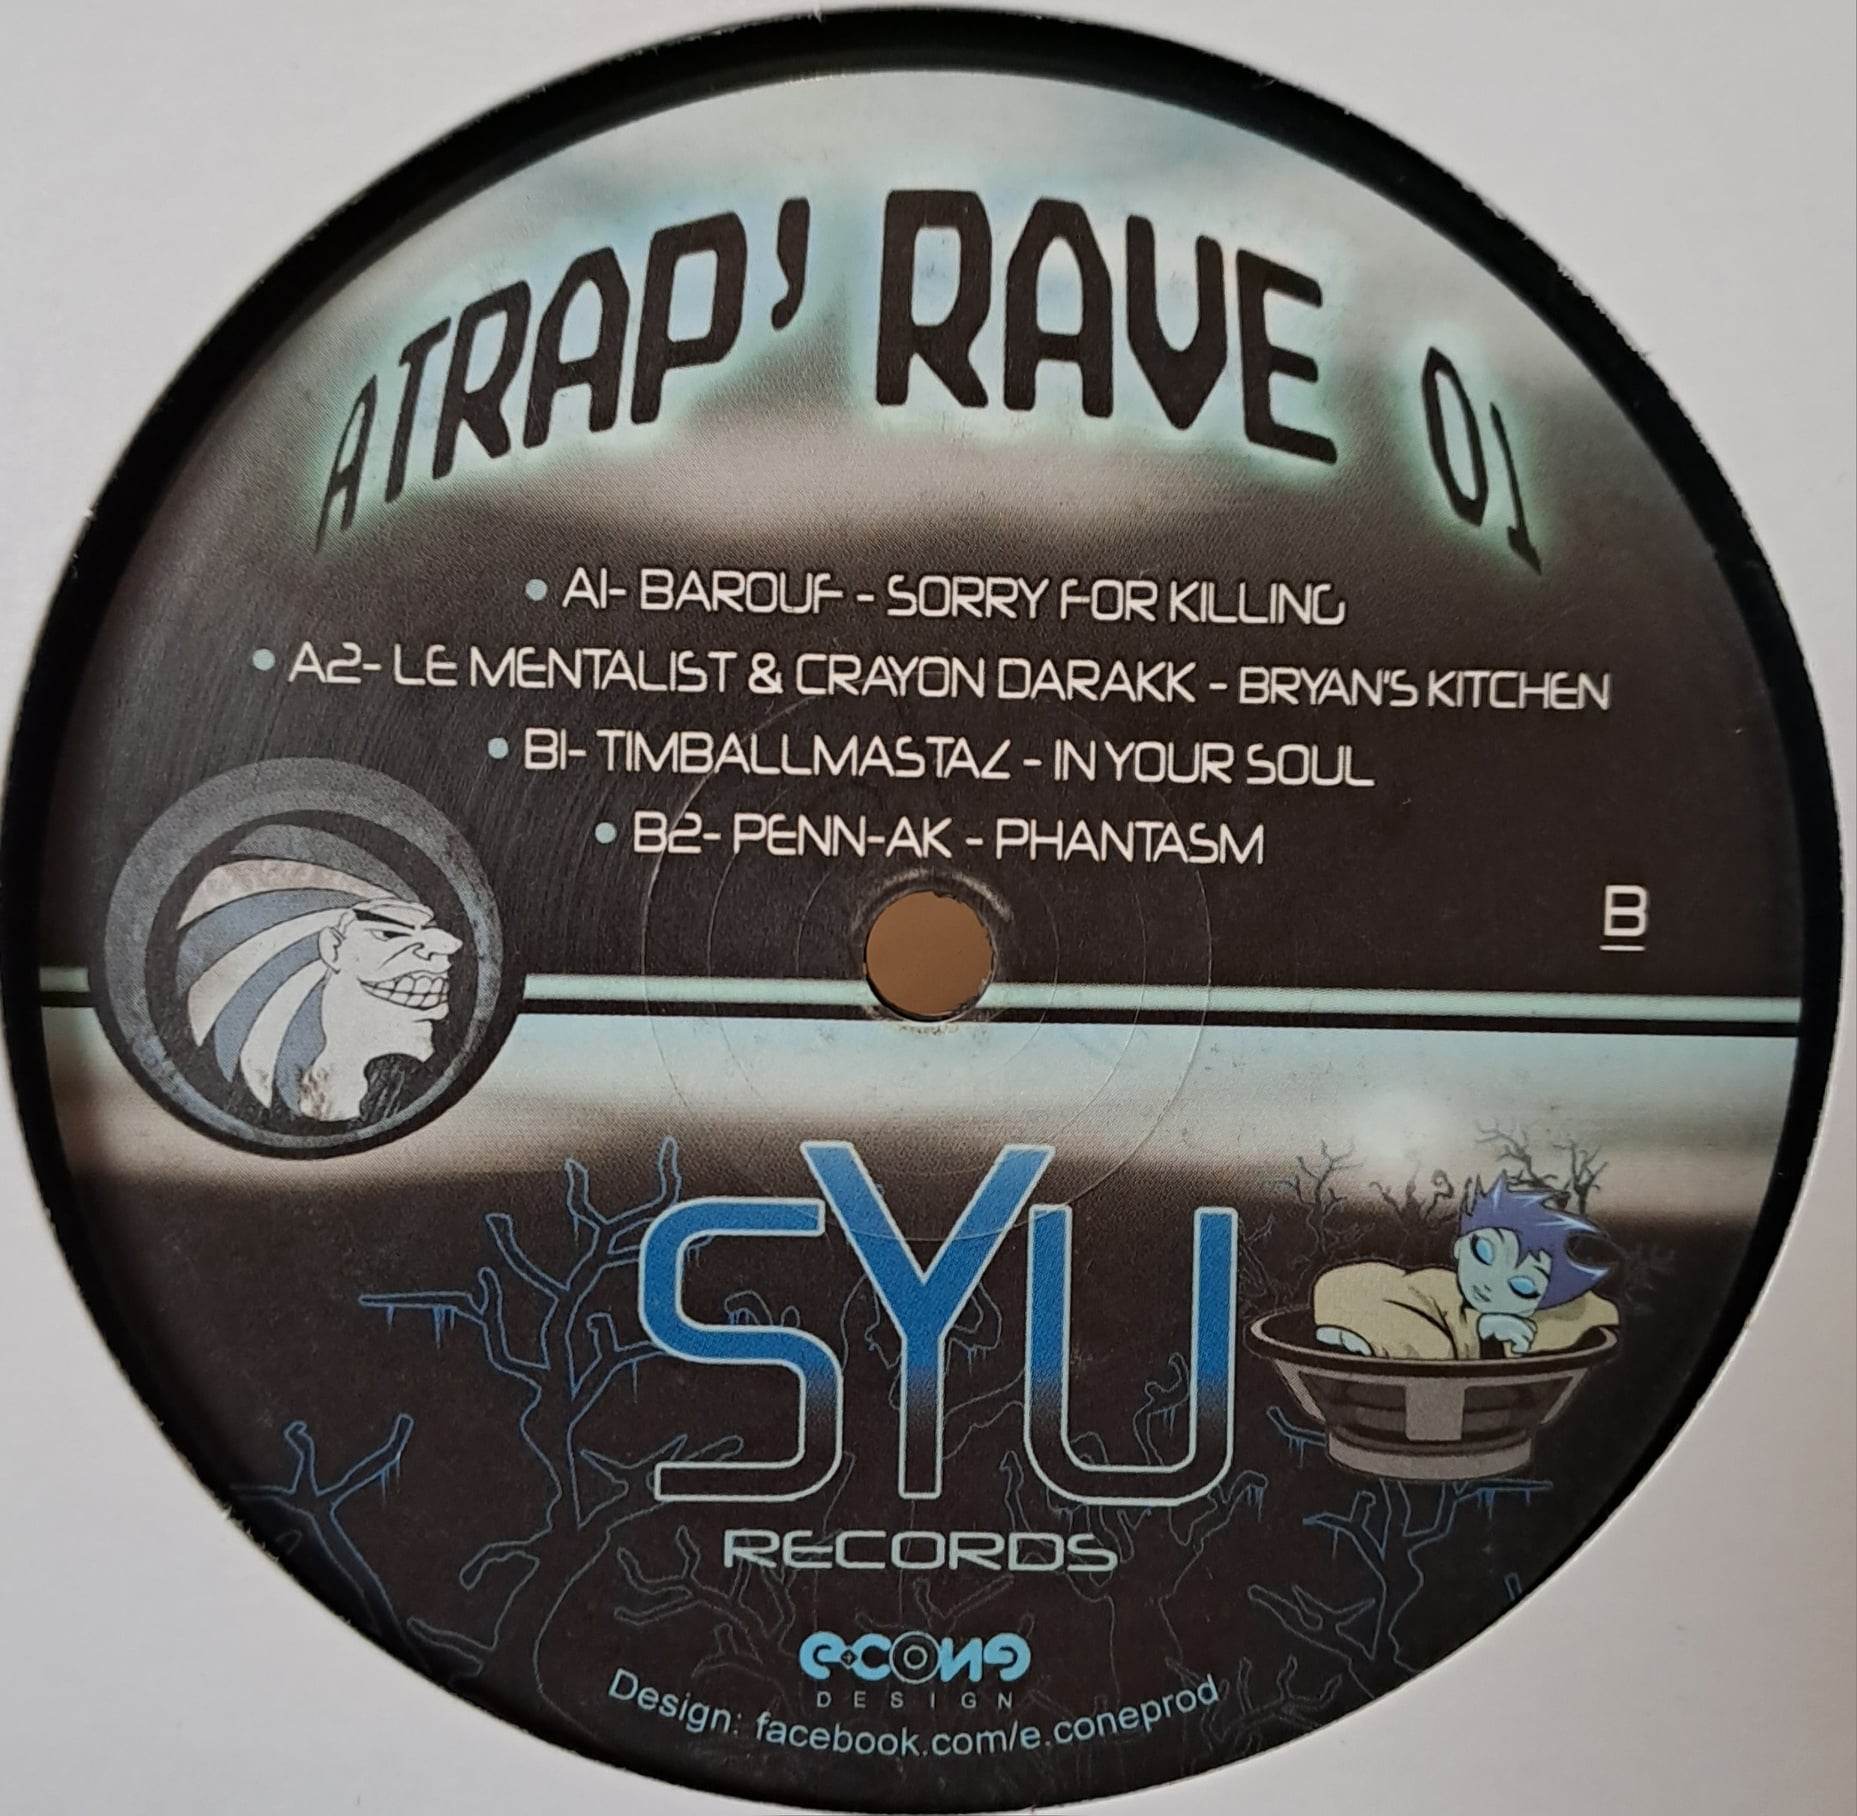 1) ATrap' Rave 01 - vinyle acid